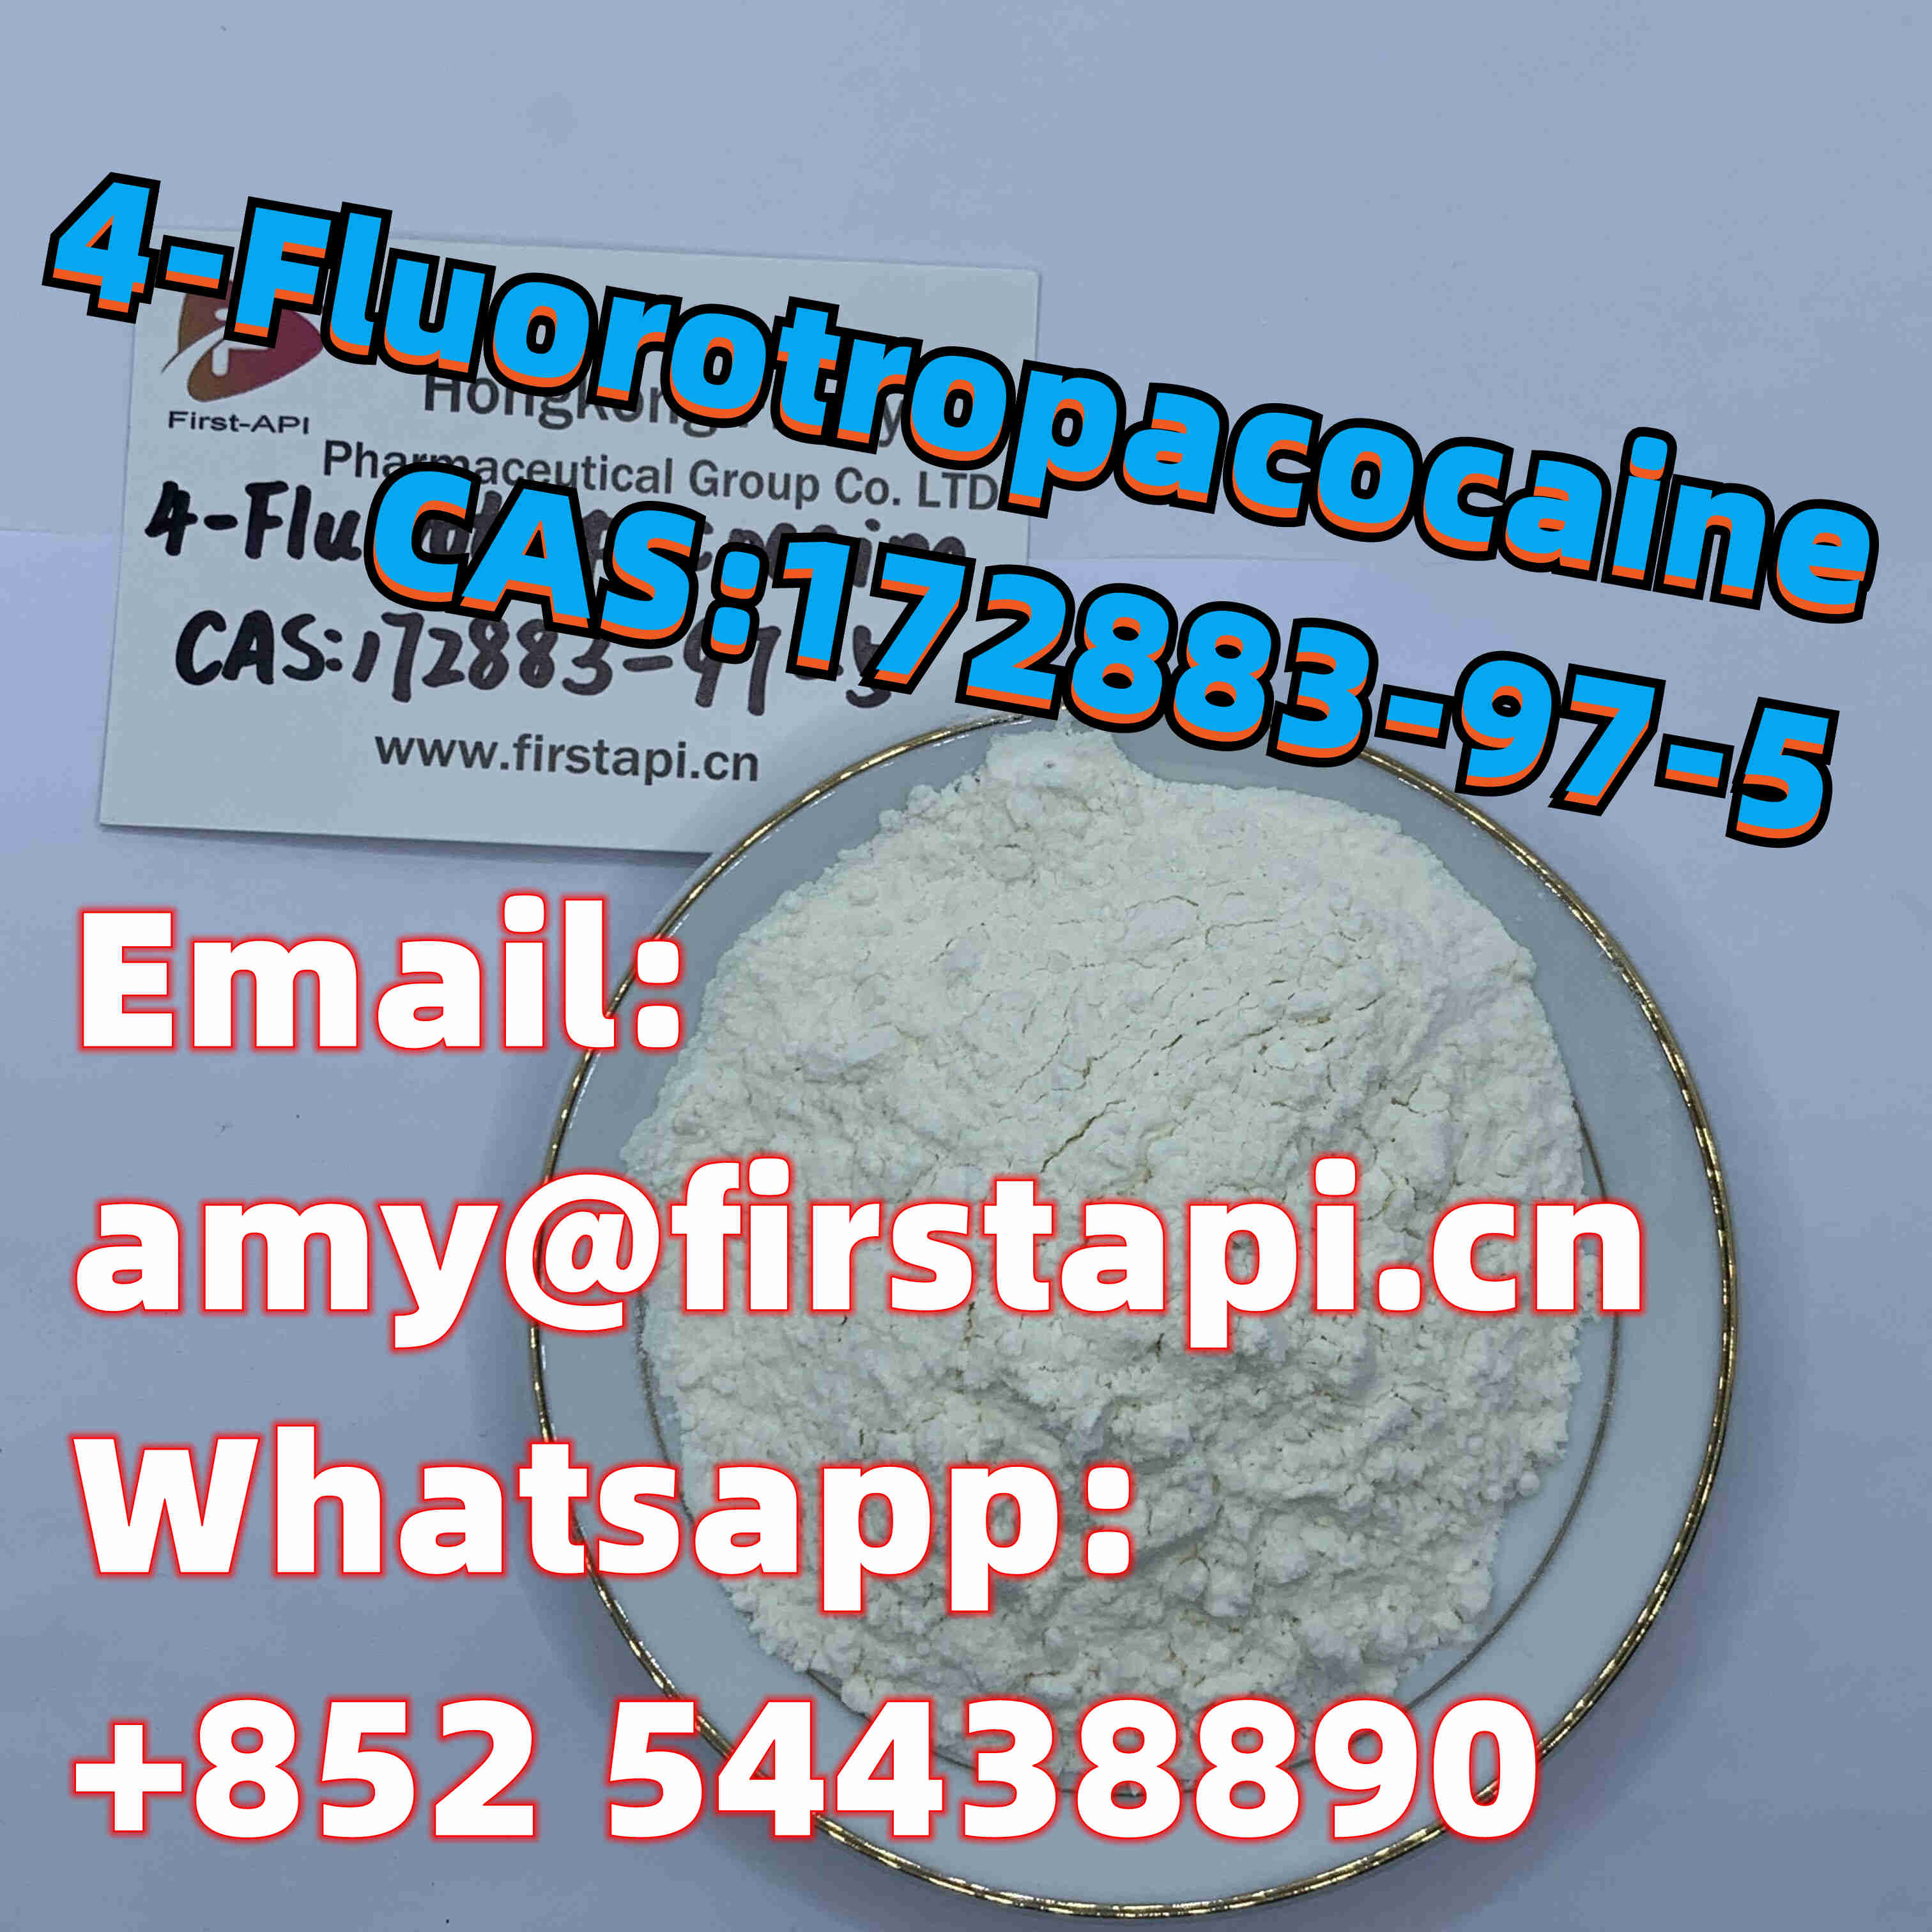 3-pseudotropyl-4fluorobenzoate   CAS No.:	172883-97-5  Whatsapp:+852 54438890 - photo